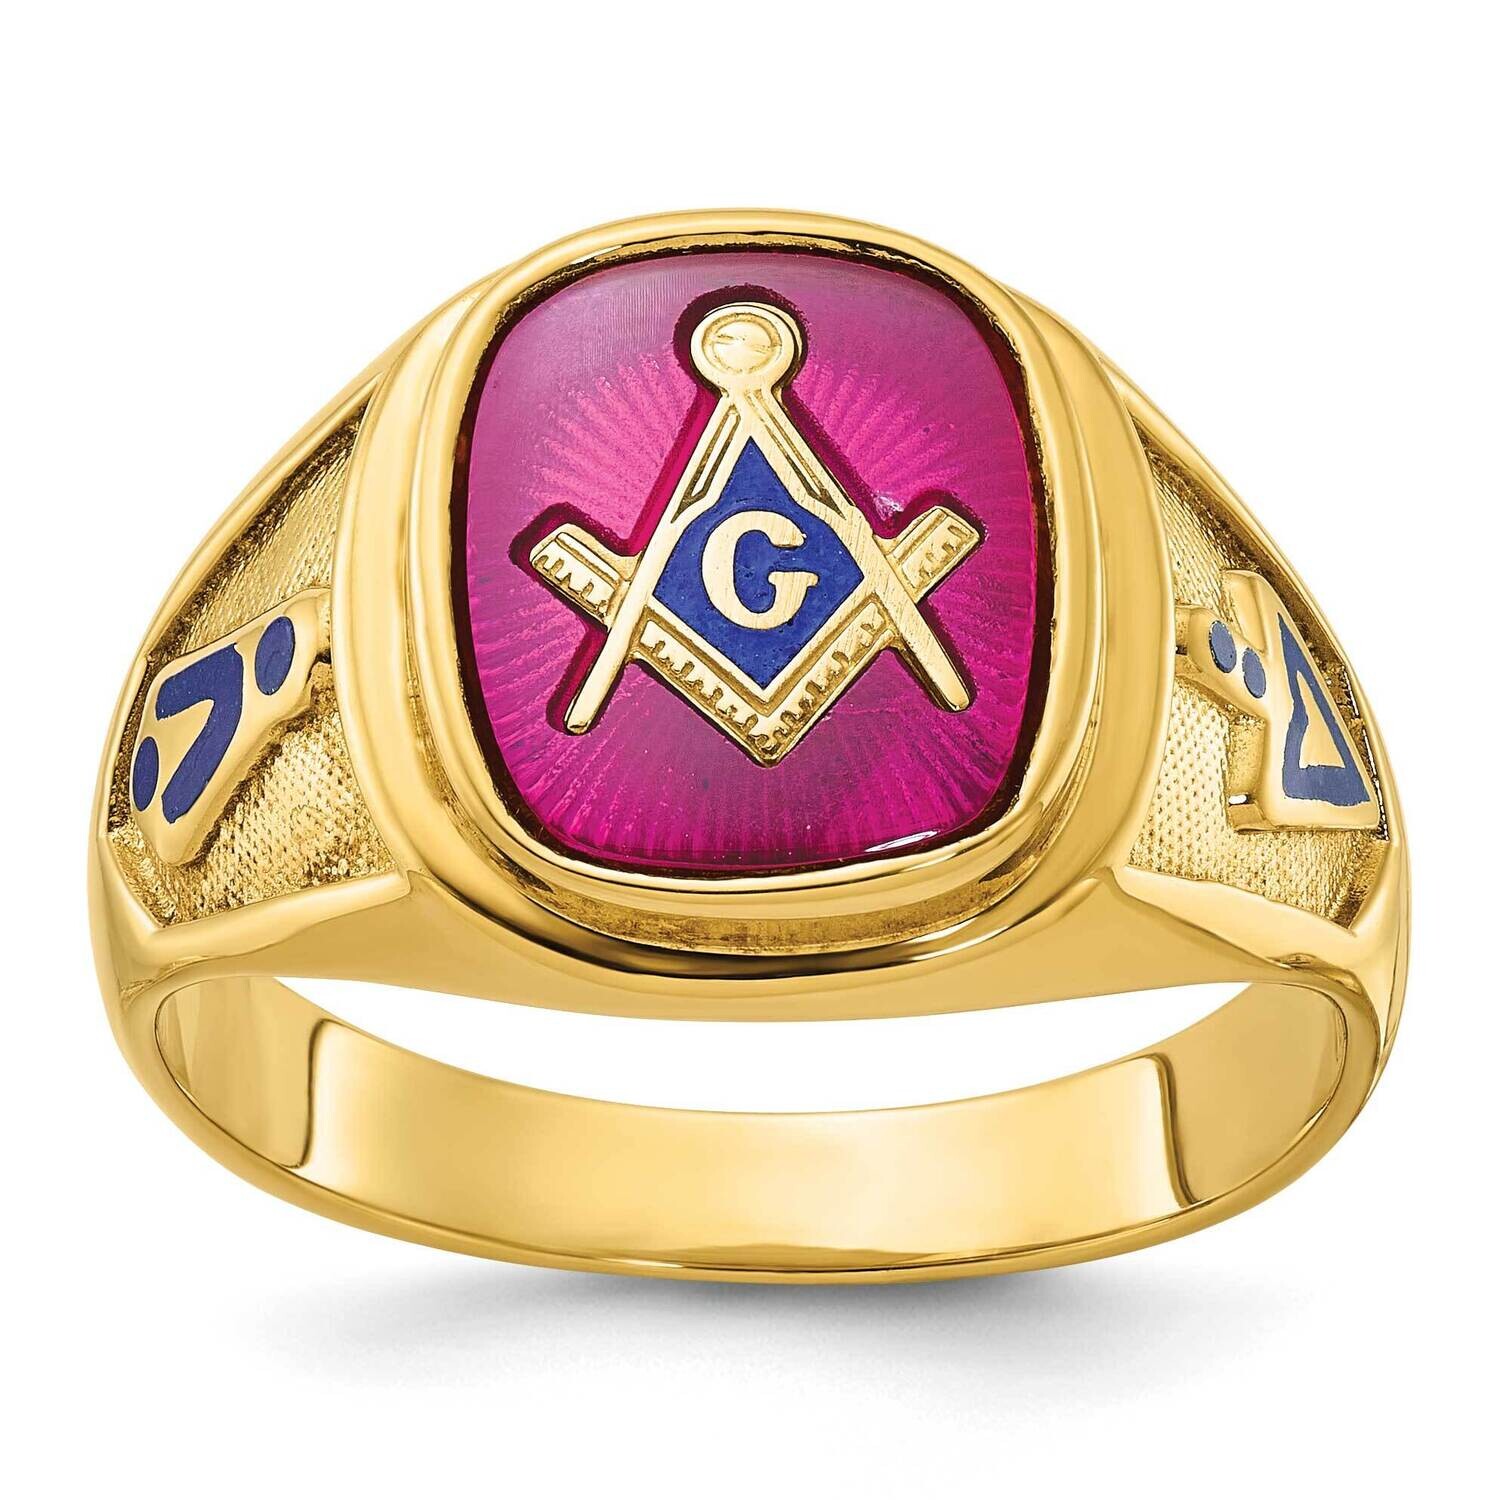 Ibgoodman Men's Polished Textured Blue Lodge Master Masonic Ring Mounting 14k Gold B57679-4Y